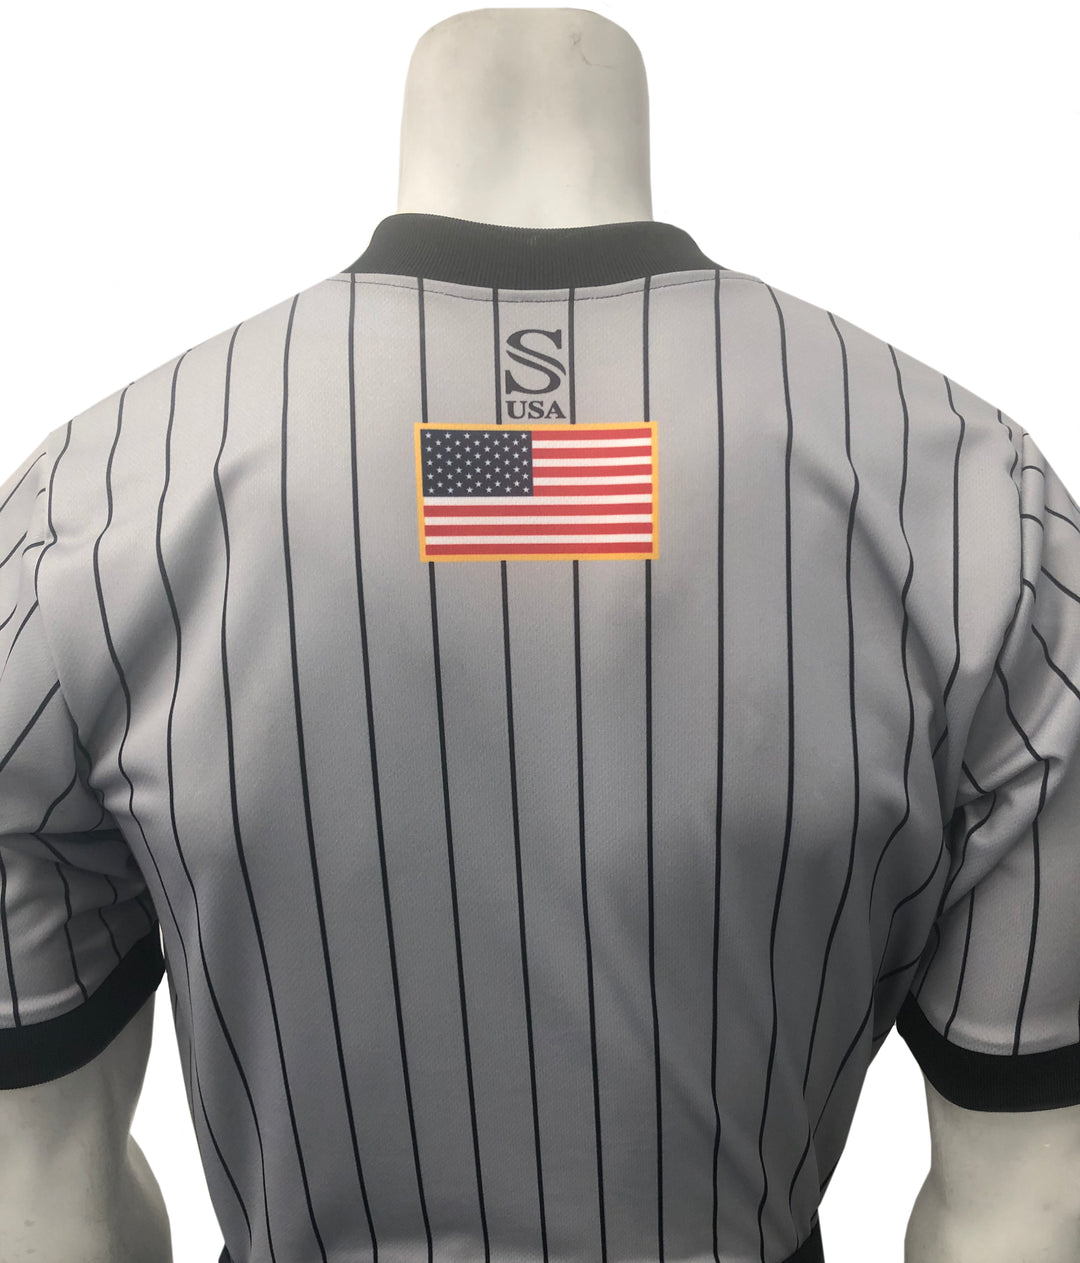 USA205FL-WR-607 - Smitty "Made in USA" - "BODY FLEX" Men's Wrestling Short Sleeve Shirt